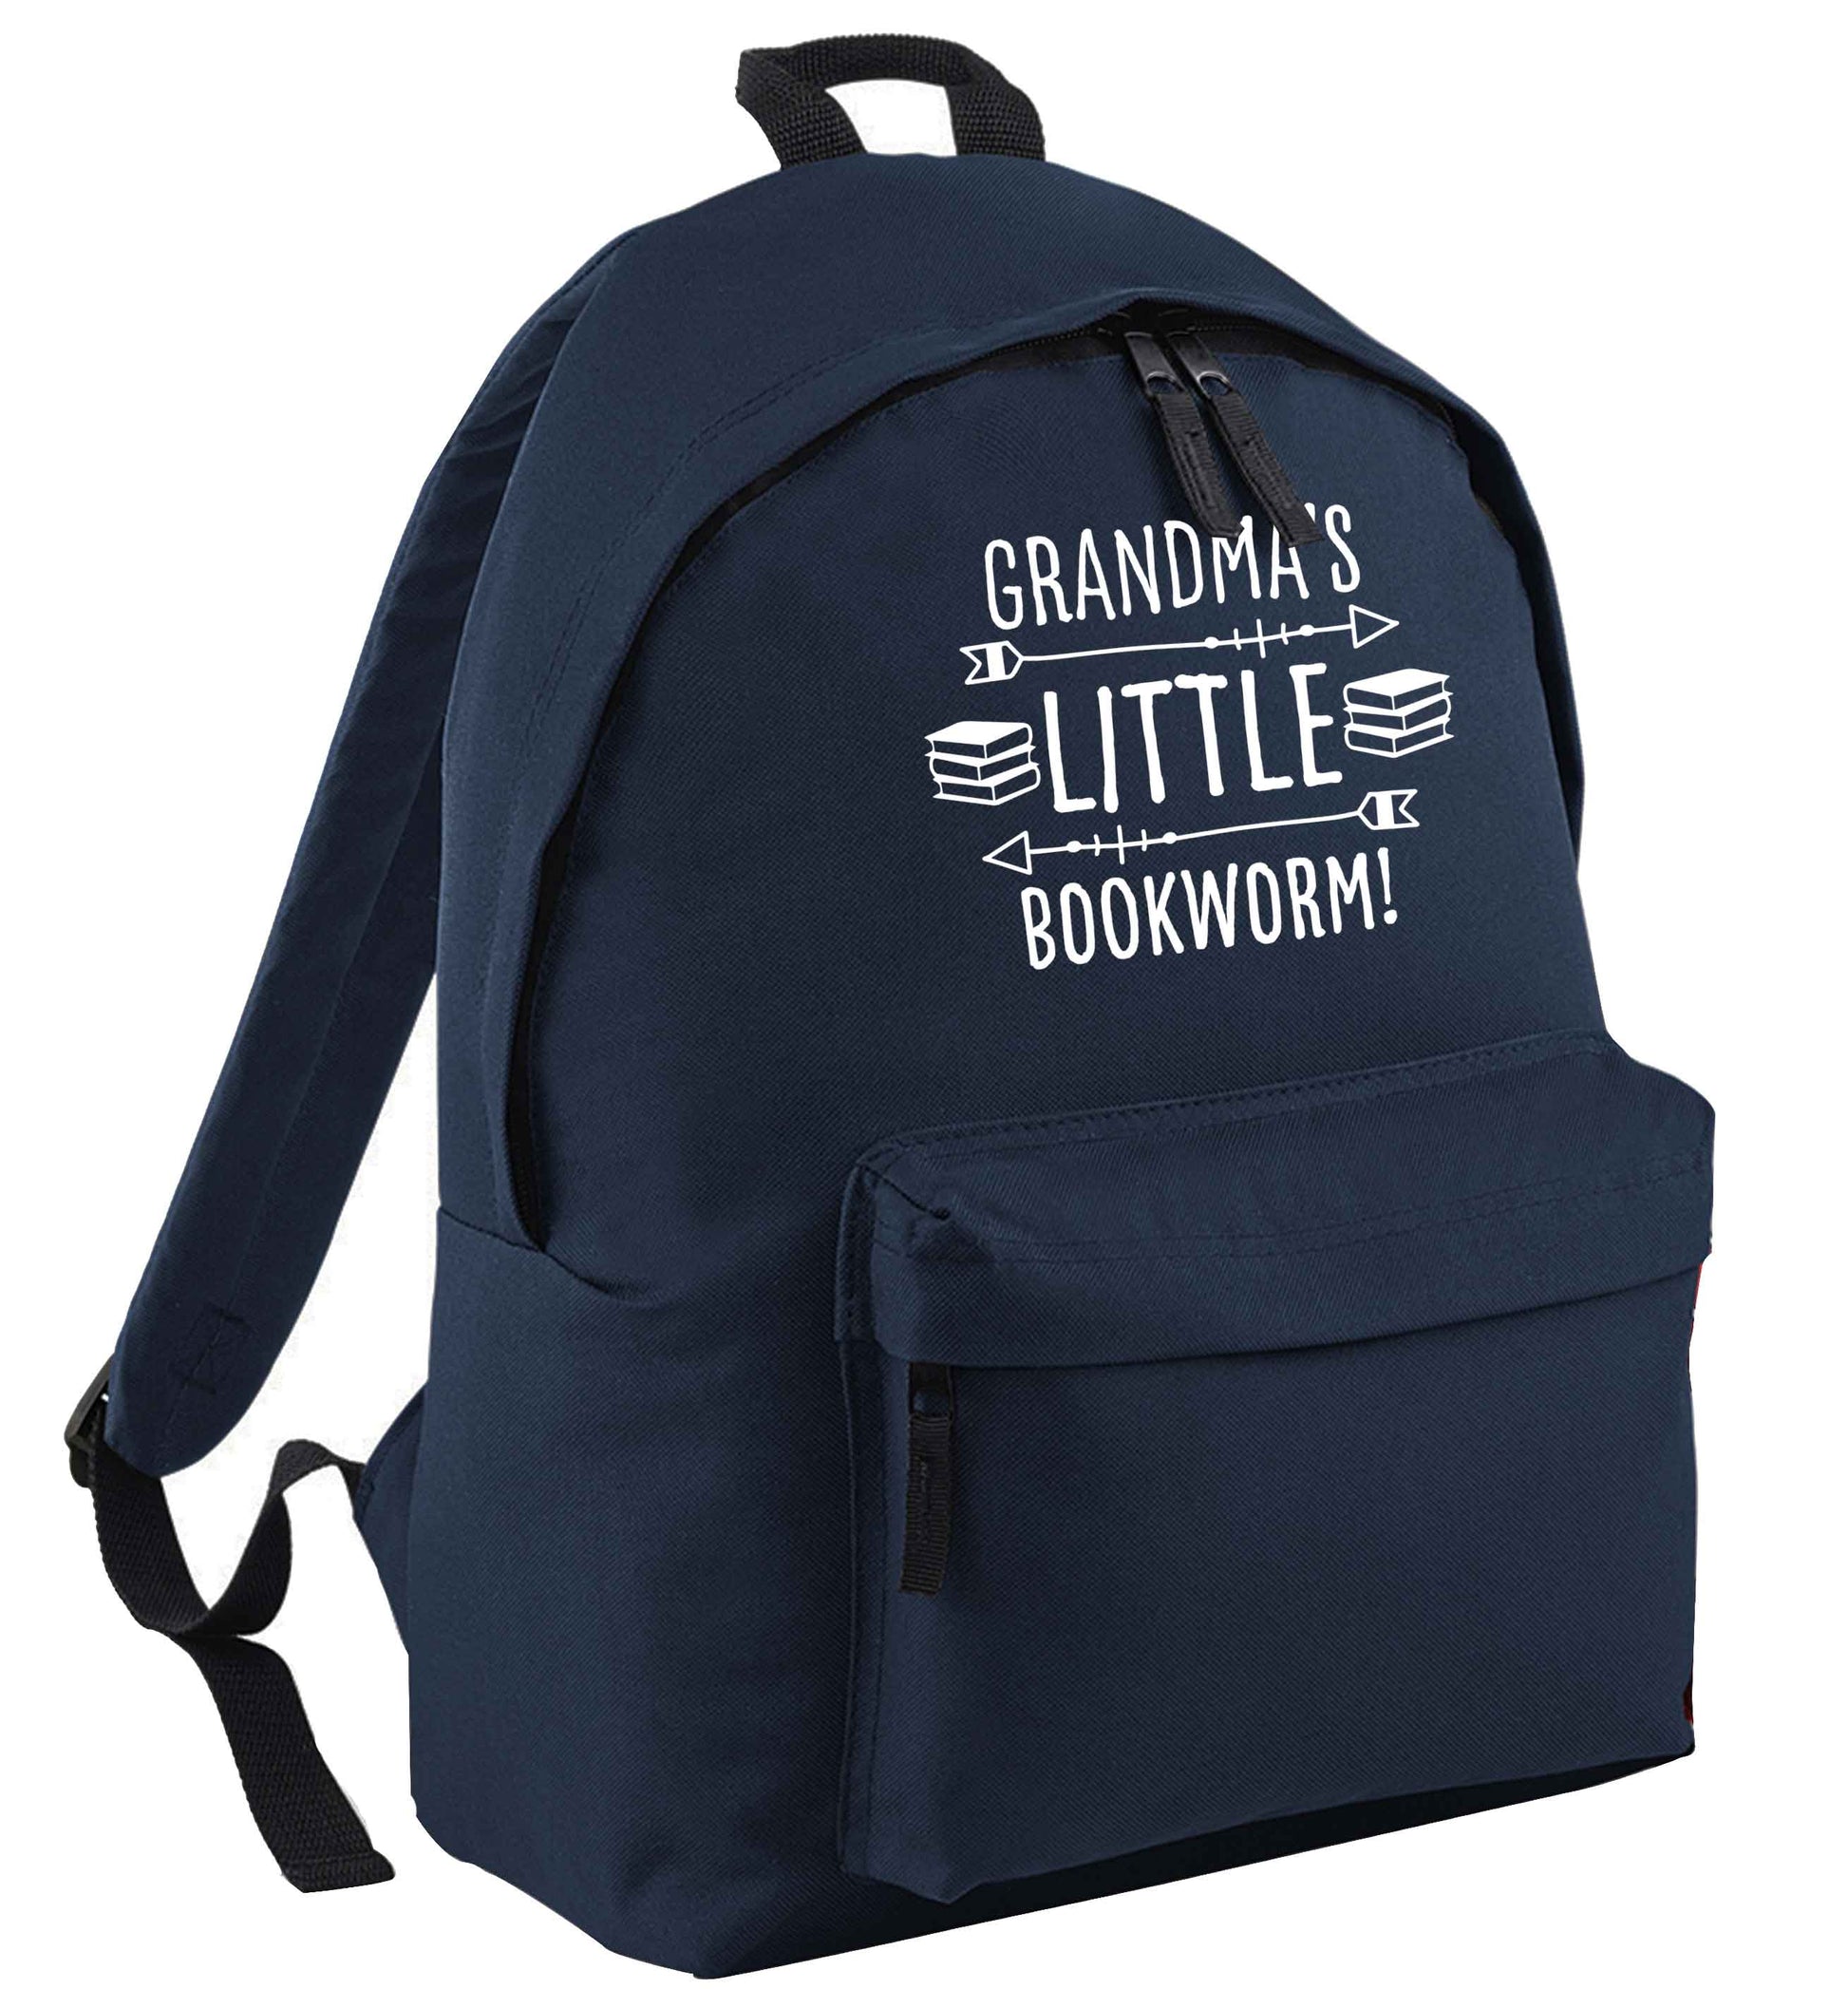 Grandma's little bookworm | Children's backpack